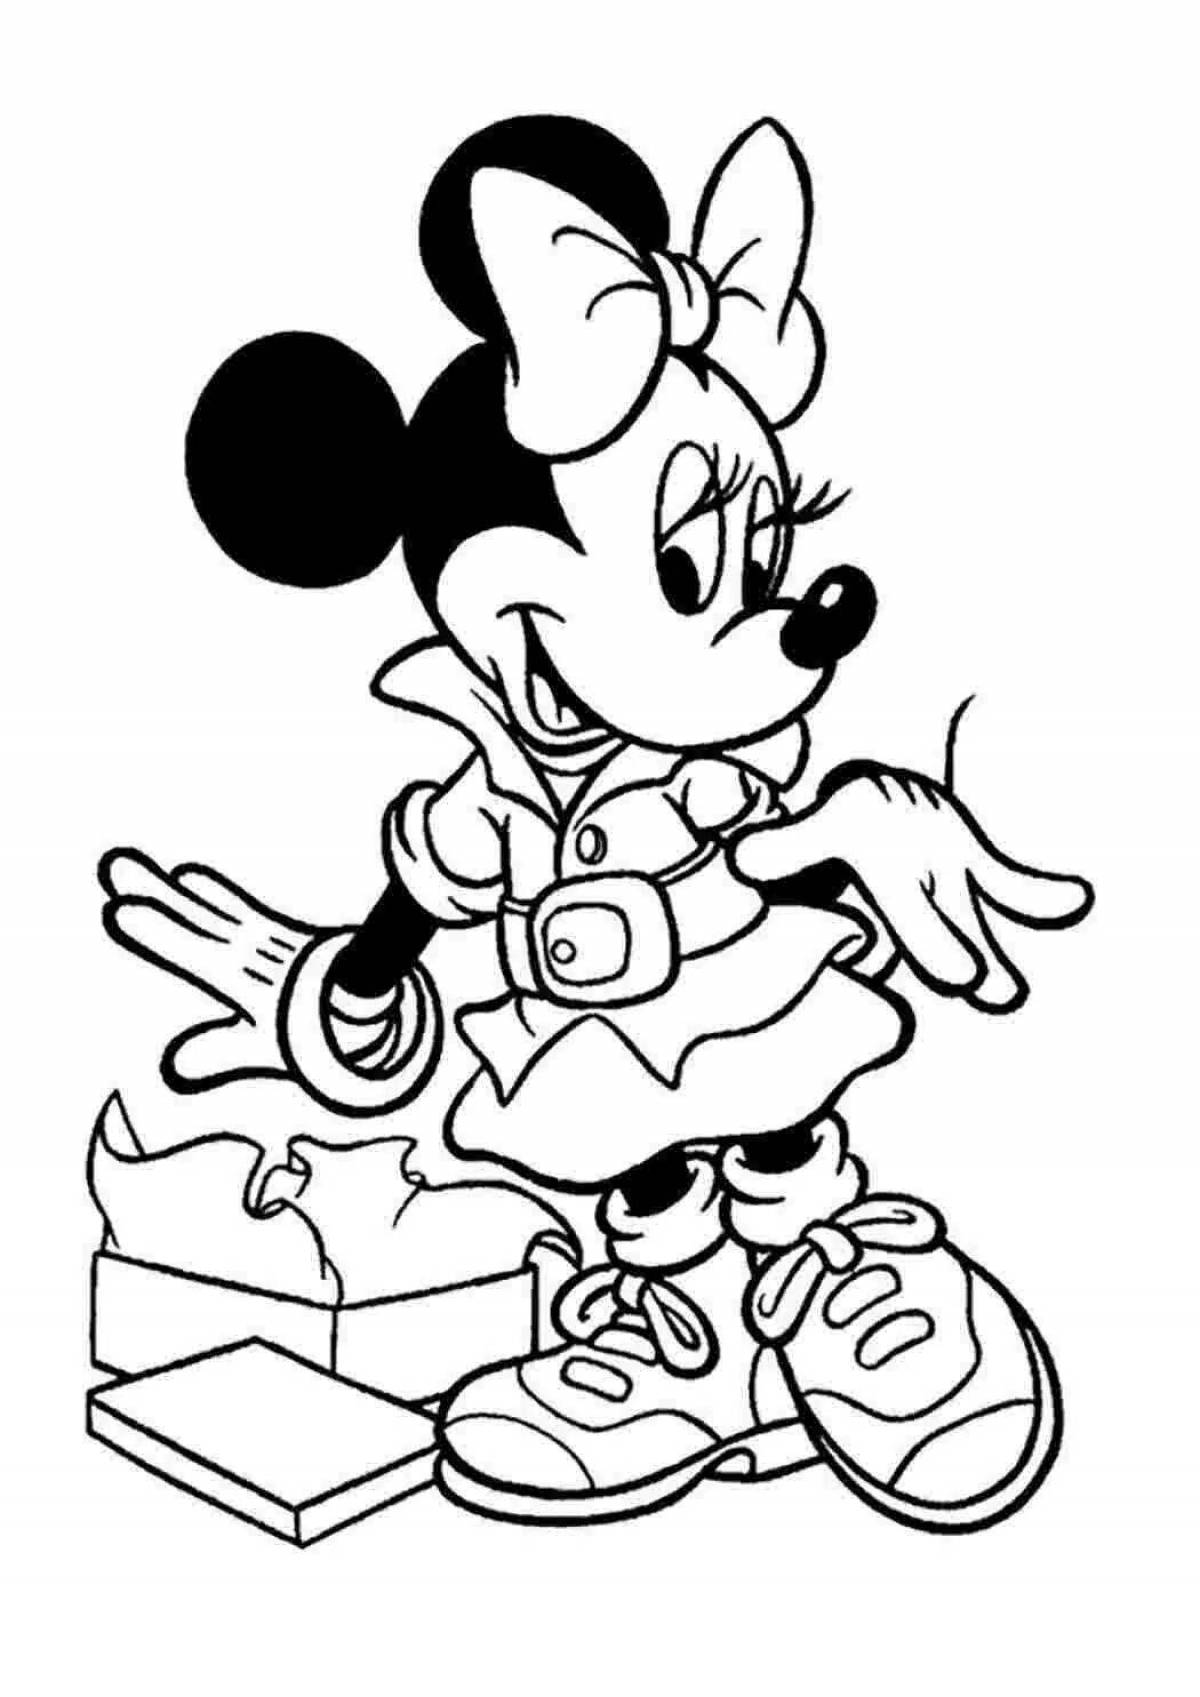 Mickey mouse fun coloring book for boys